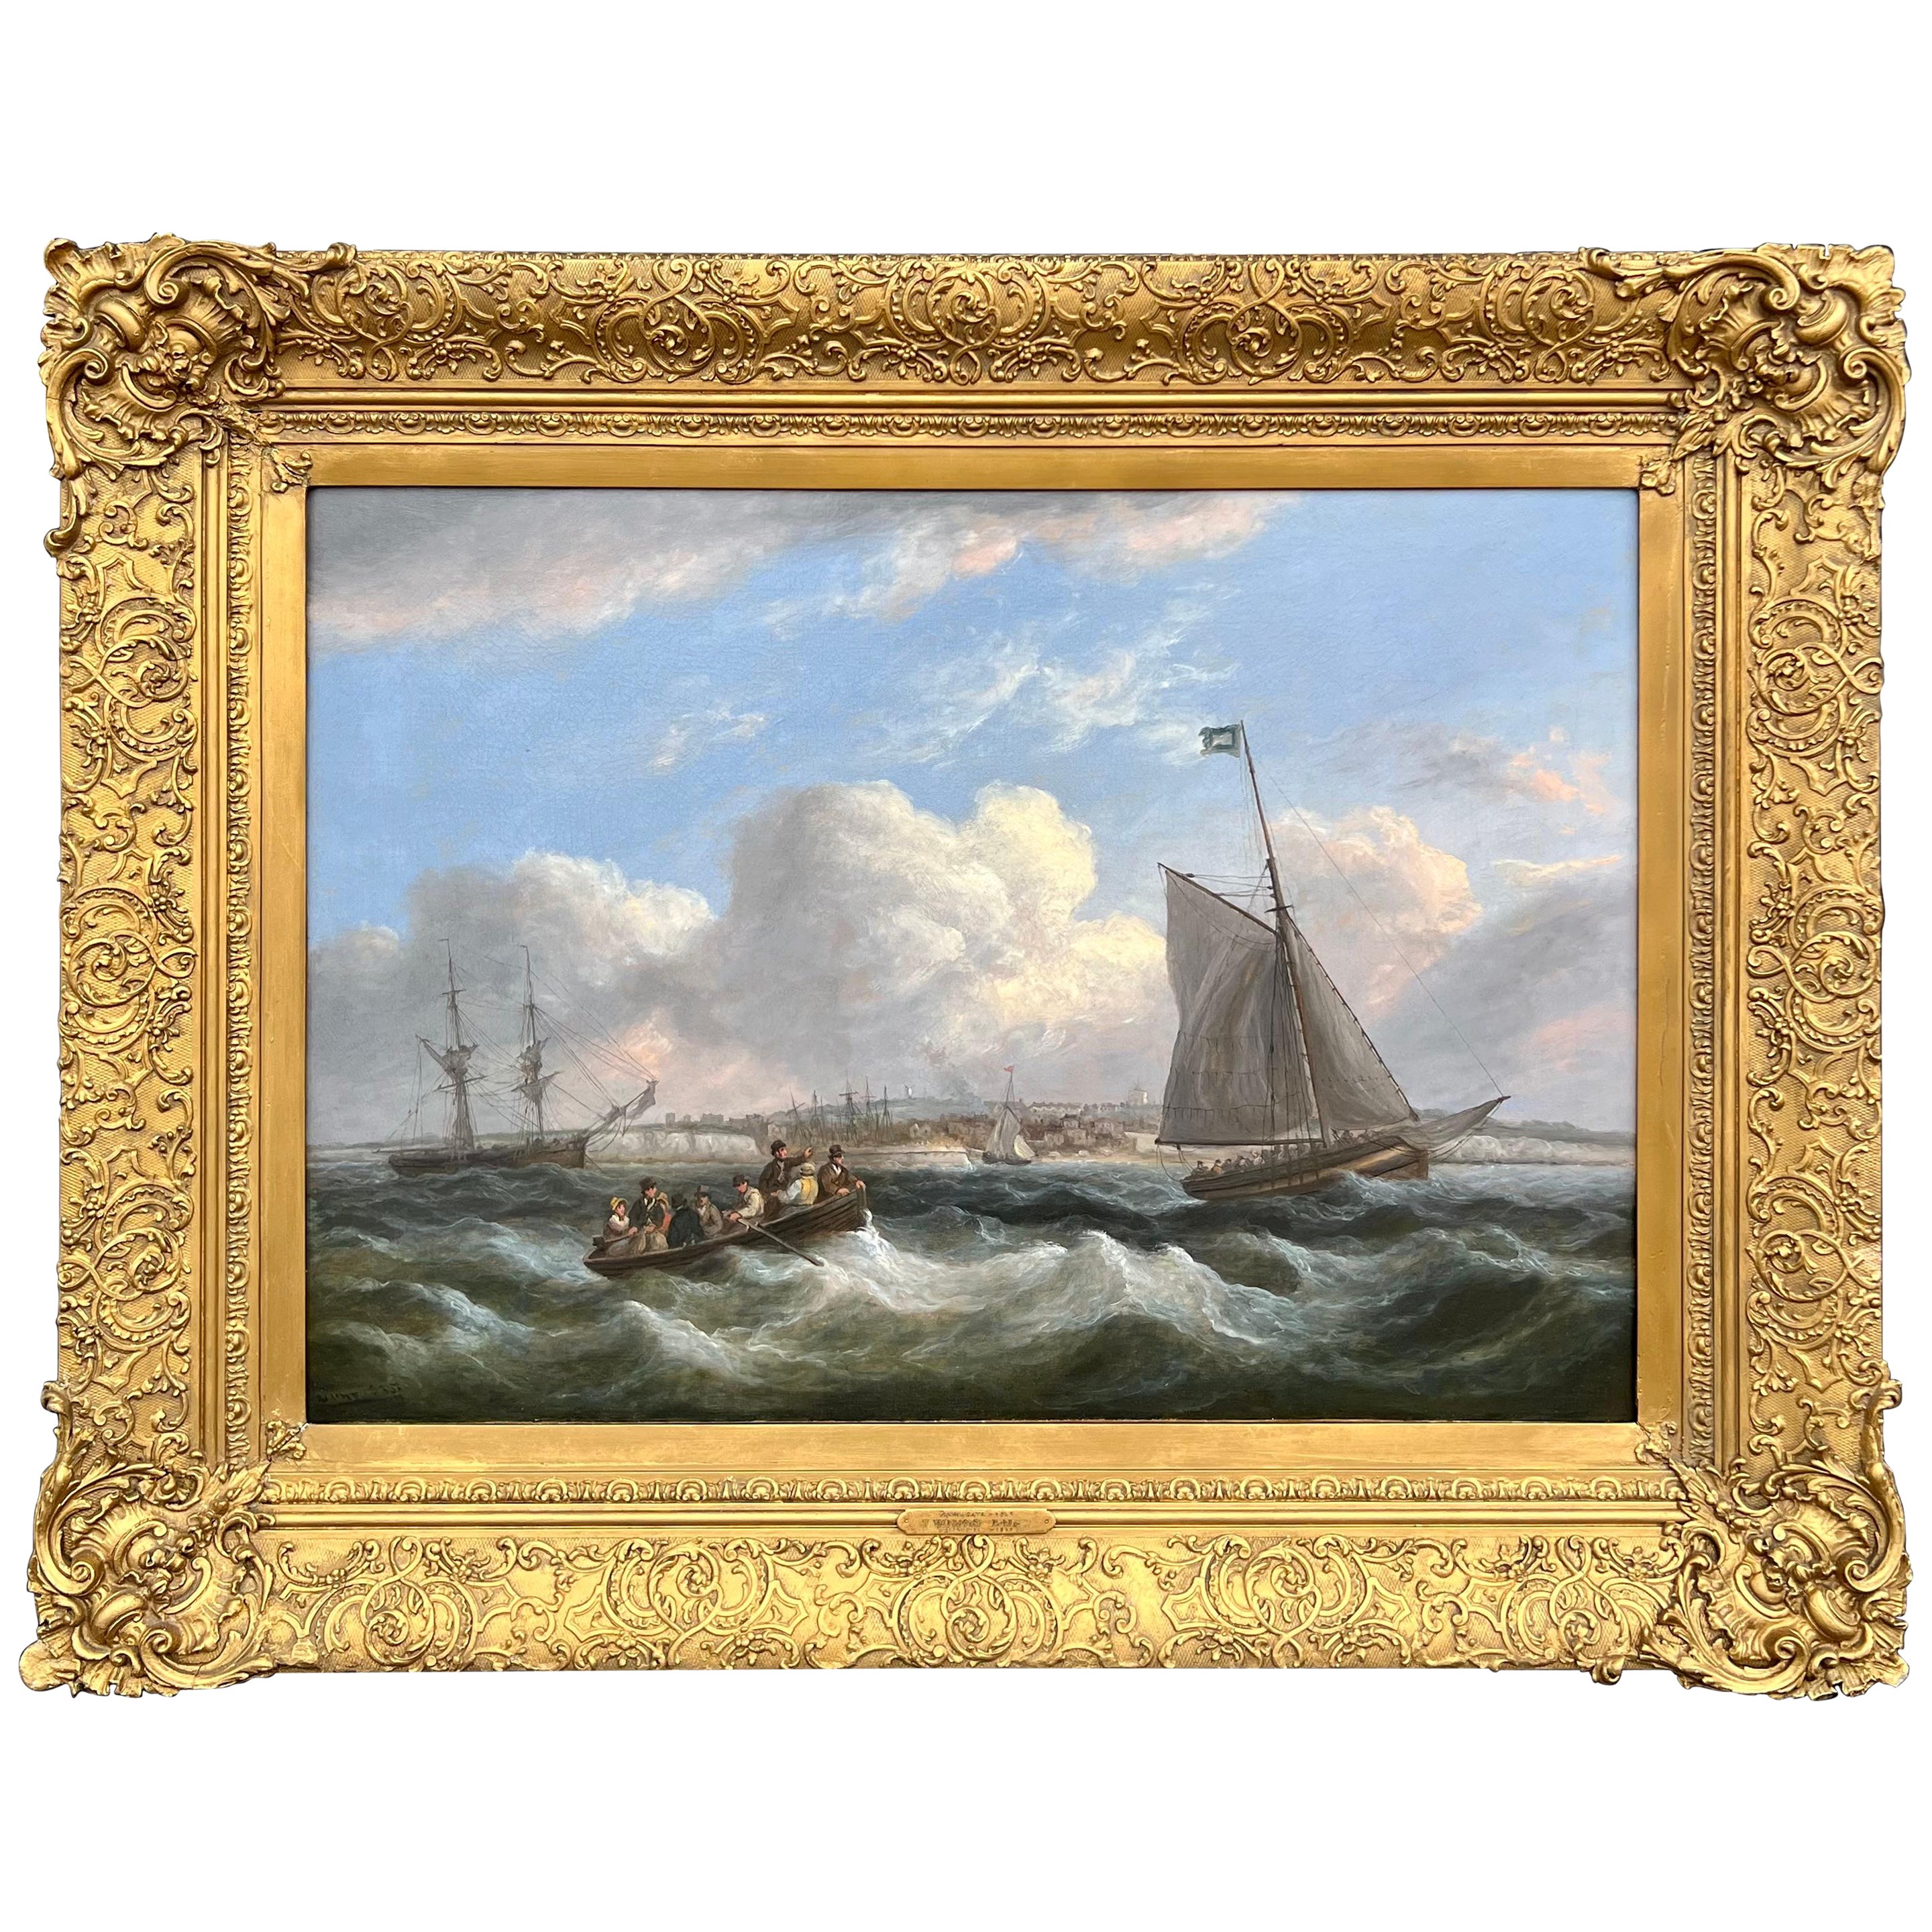 „Shipping Off the Coast“ von Thomas Luny